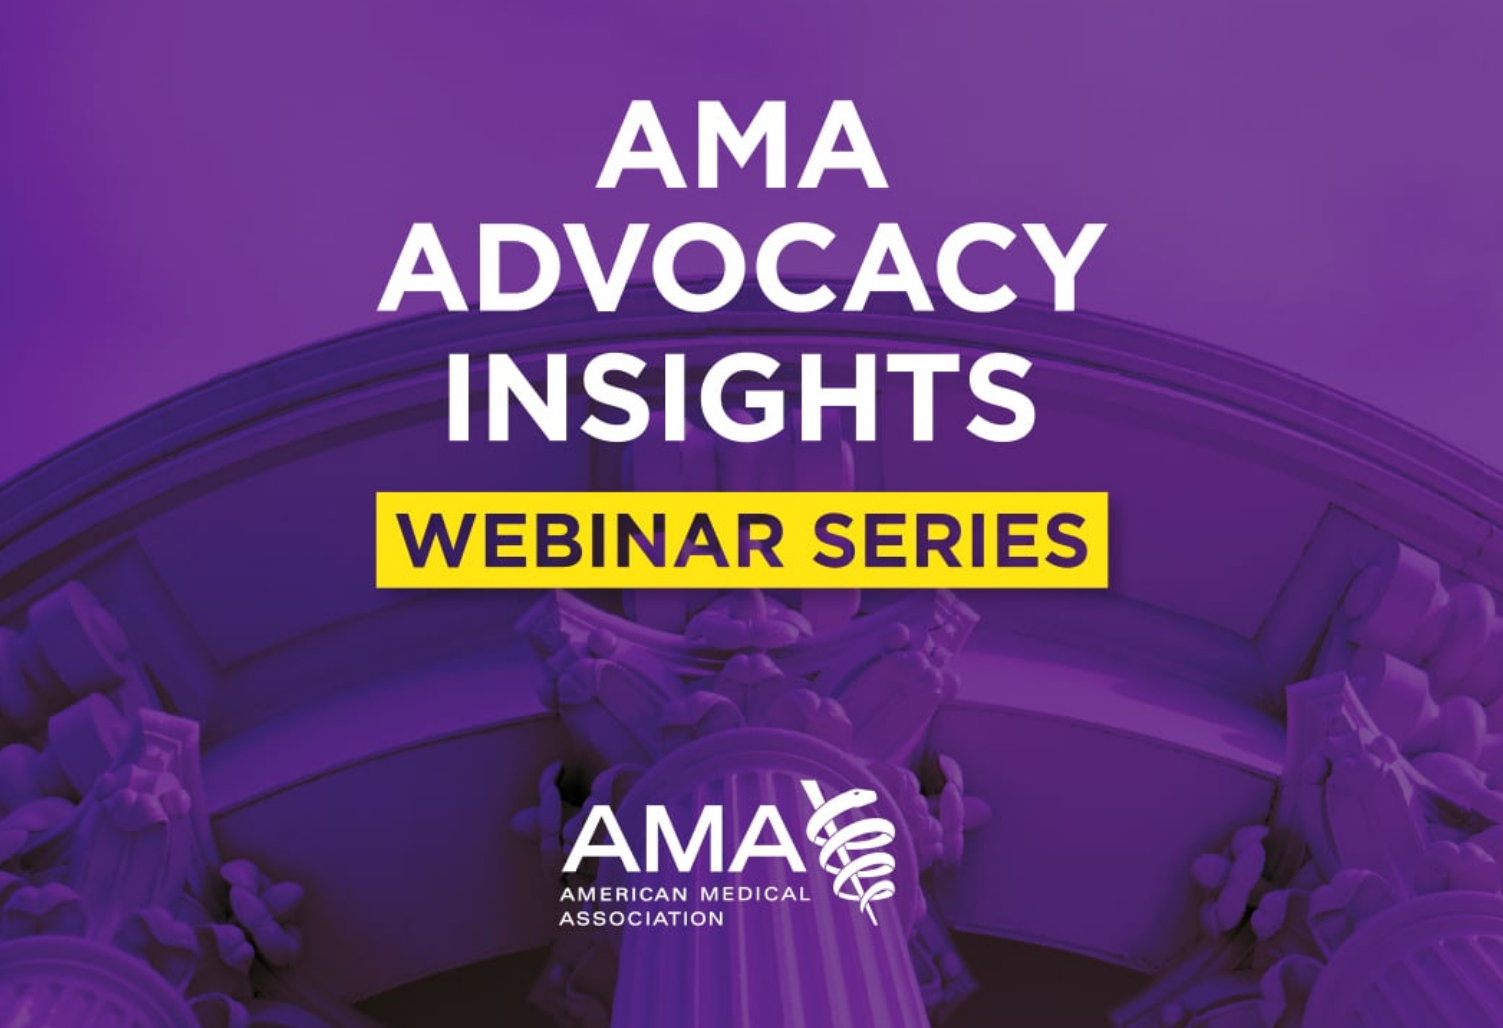 AMA Advocacy Insights webinar series: The latest on Medicare payment legislation